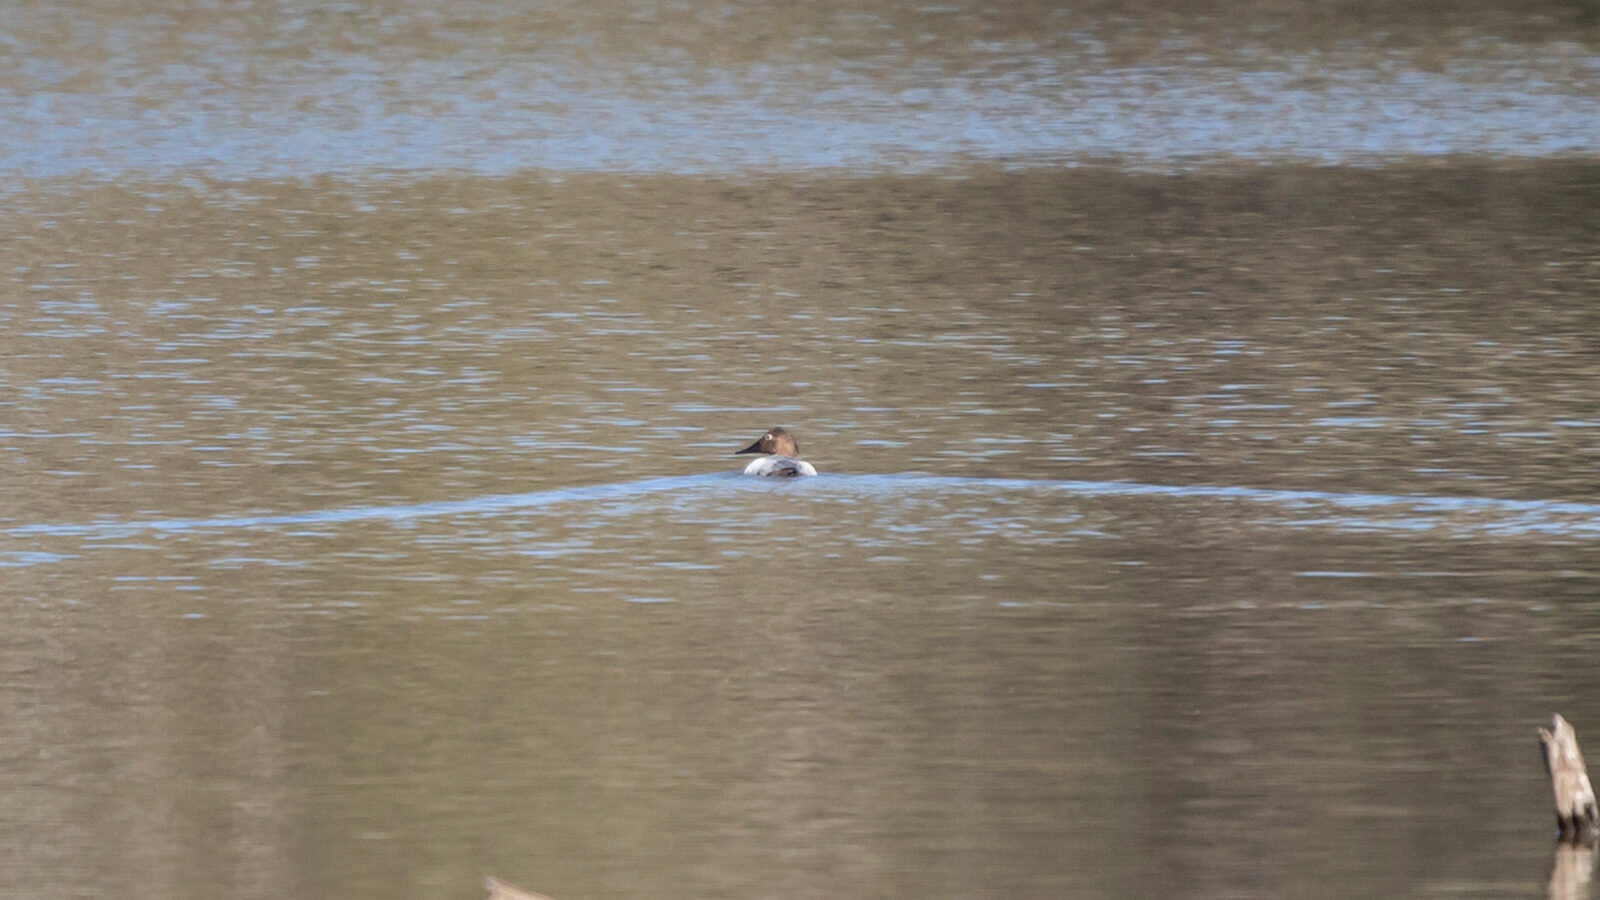 Canvasback duck swimming